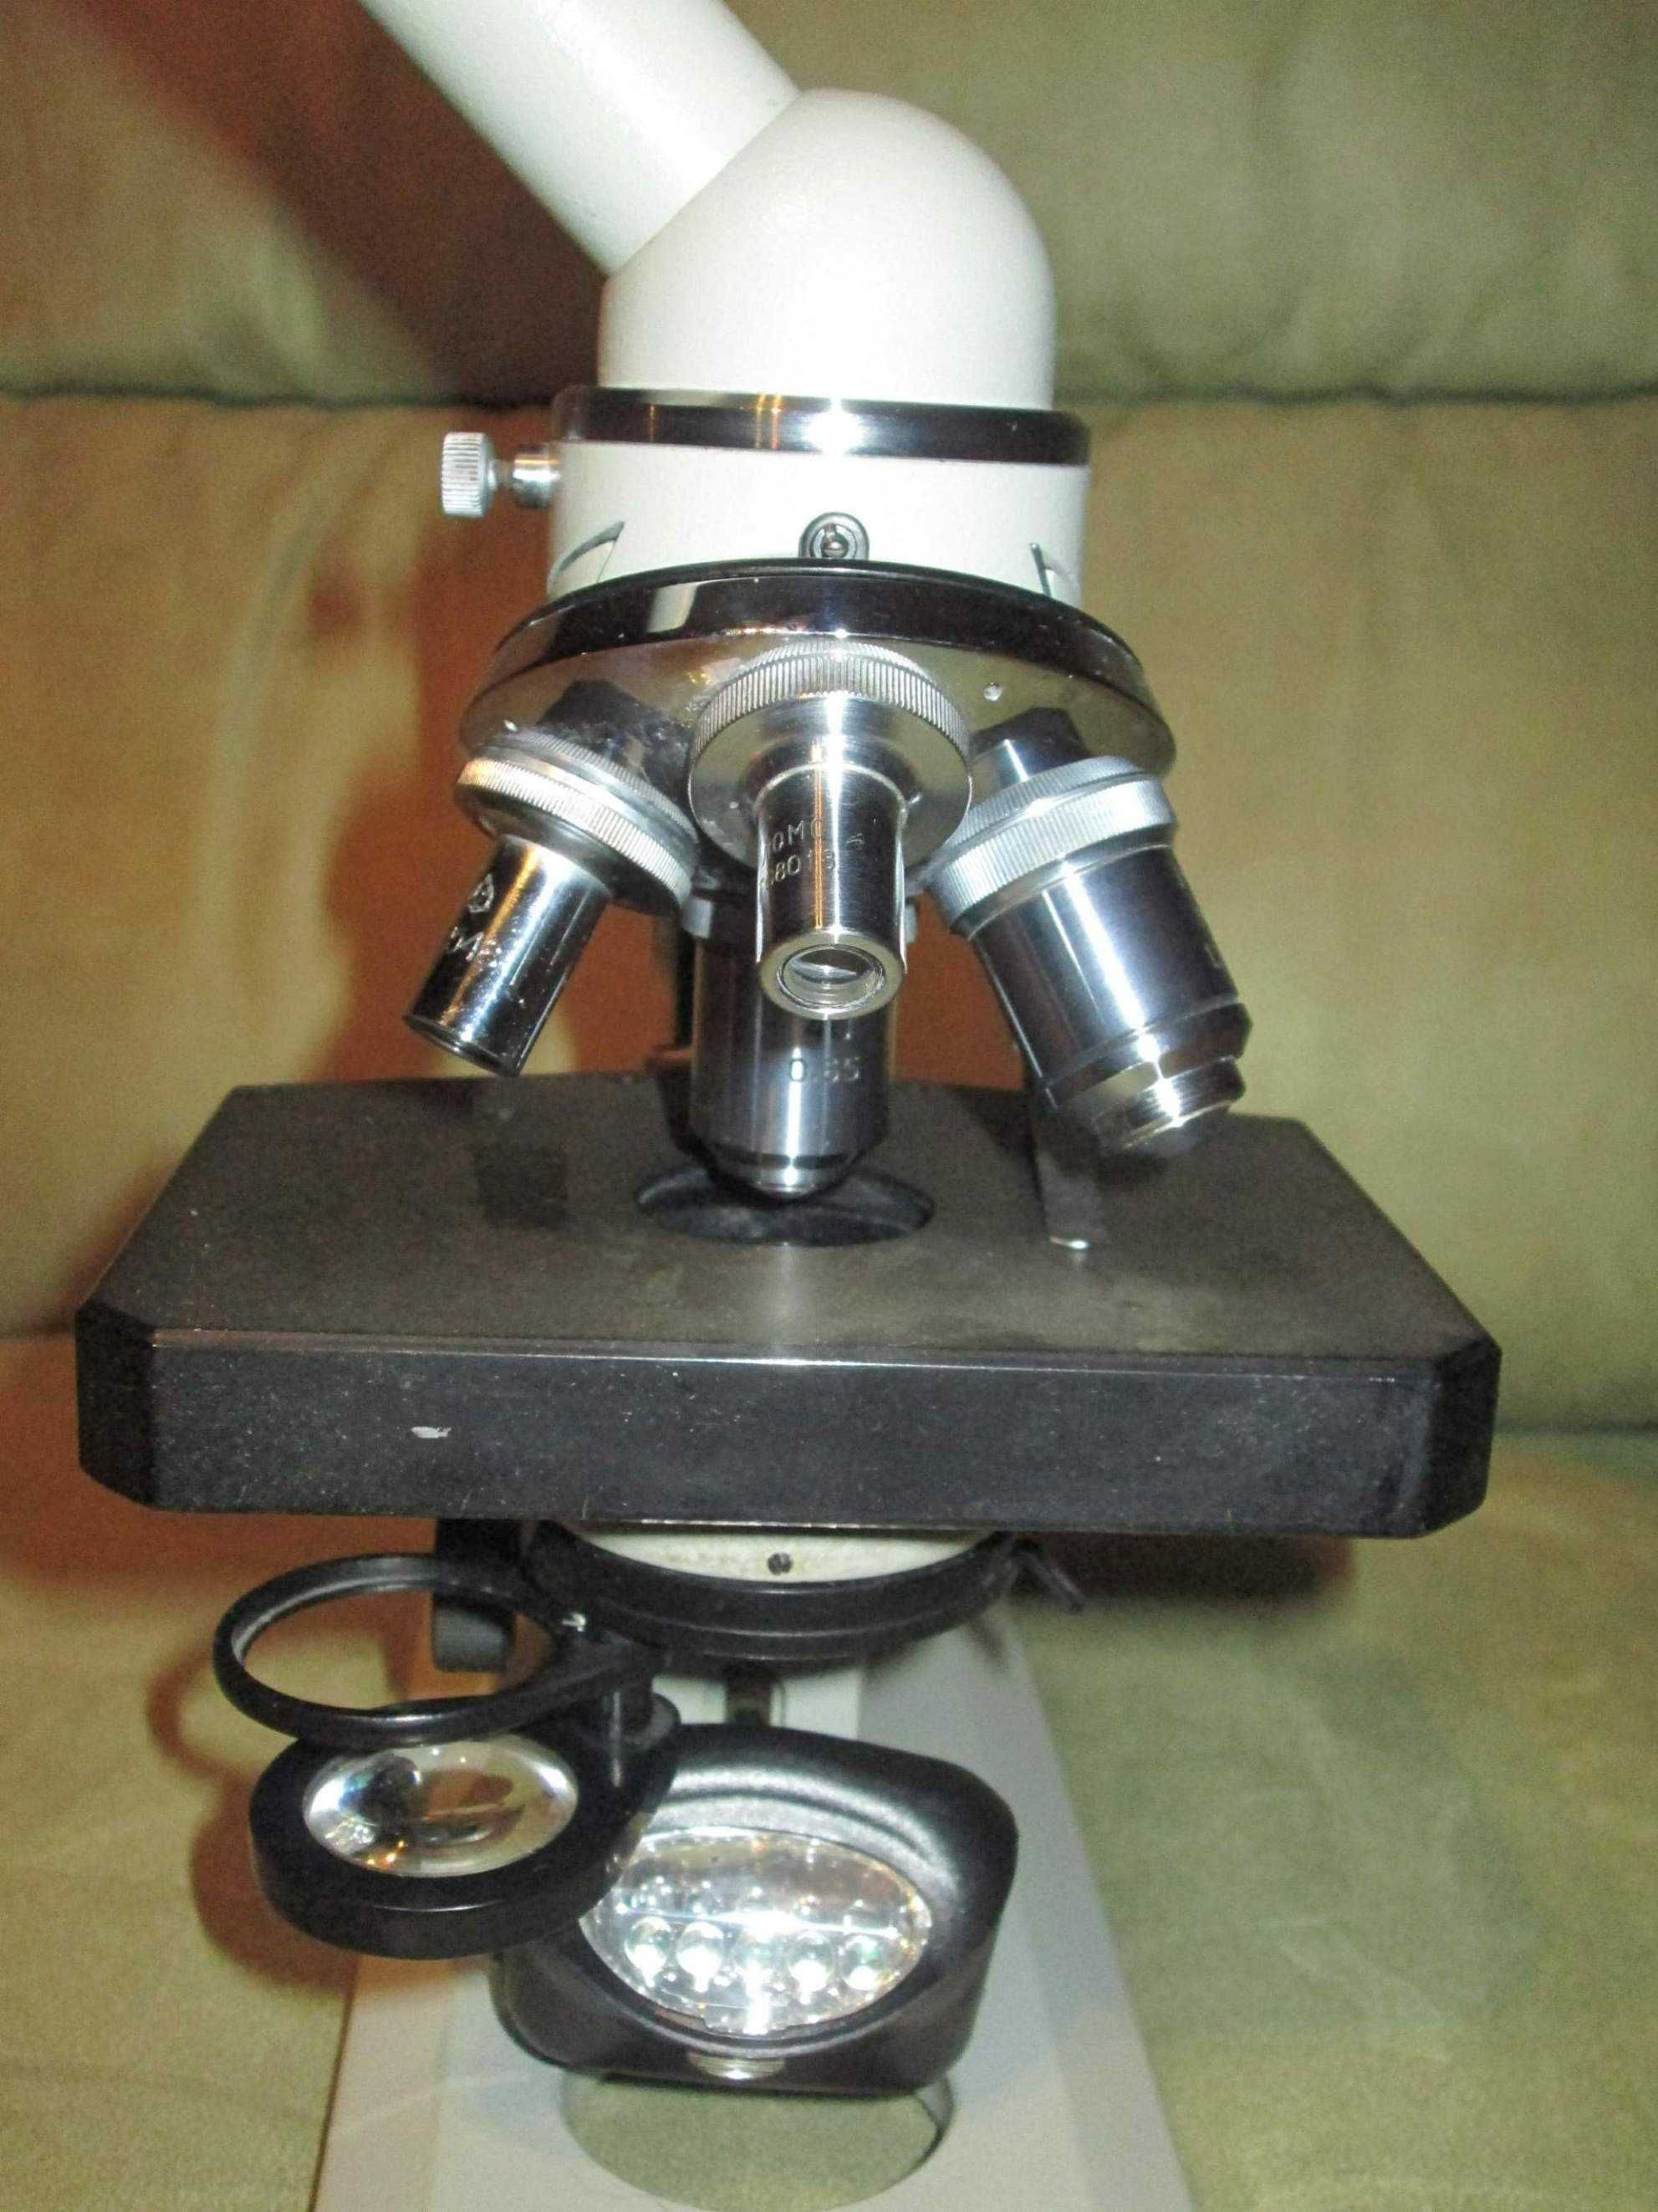 Lomo mikroskop C1Y4.2, Łomo Made in USSR (CCCP) Vintage - RZADKI